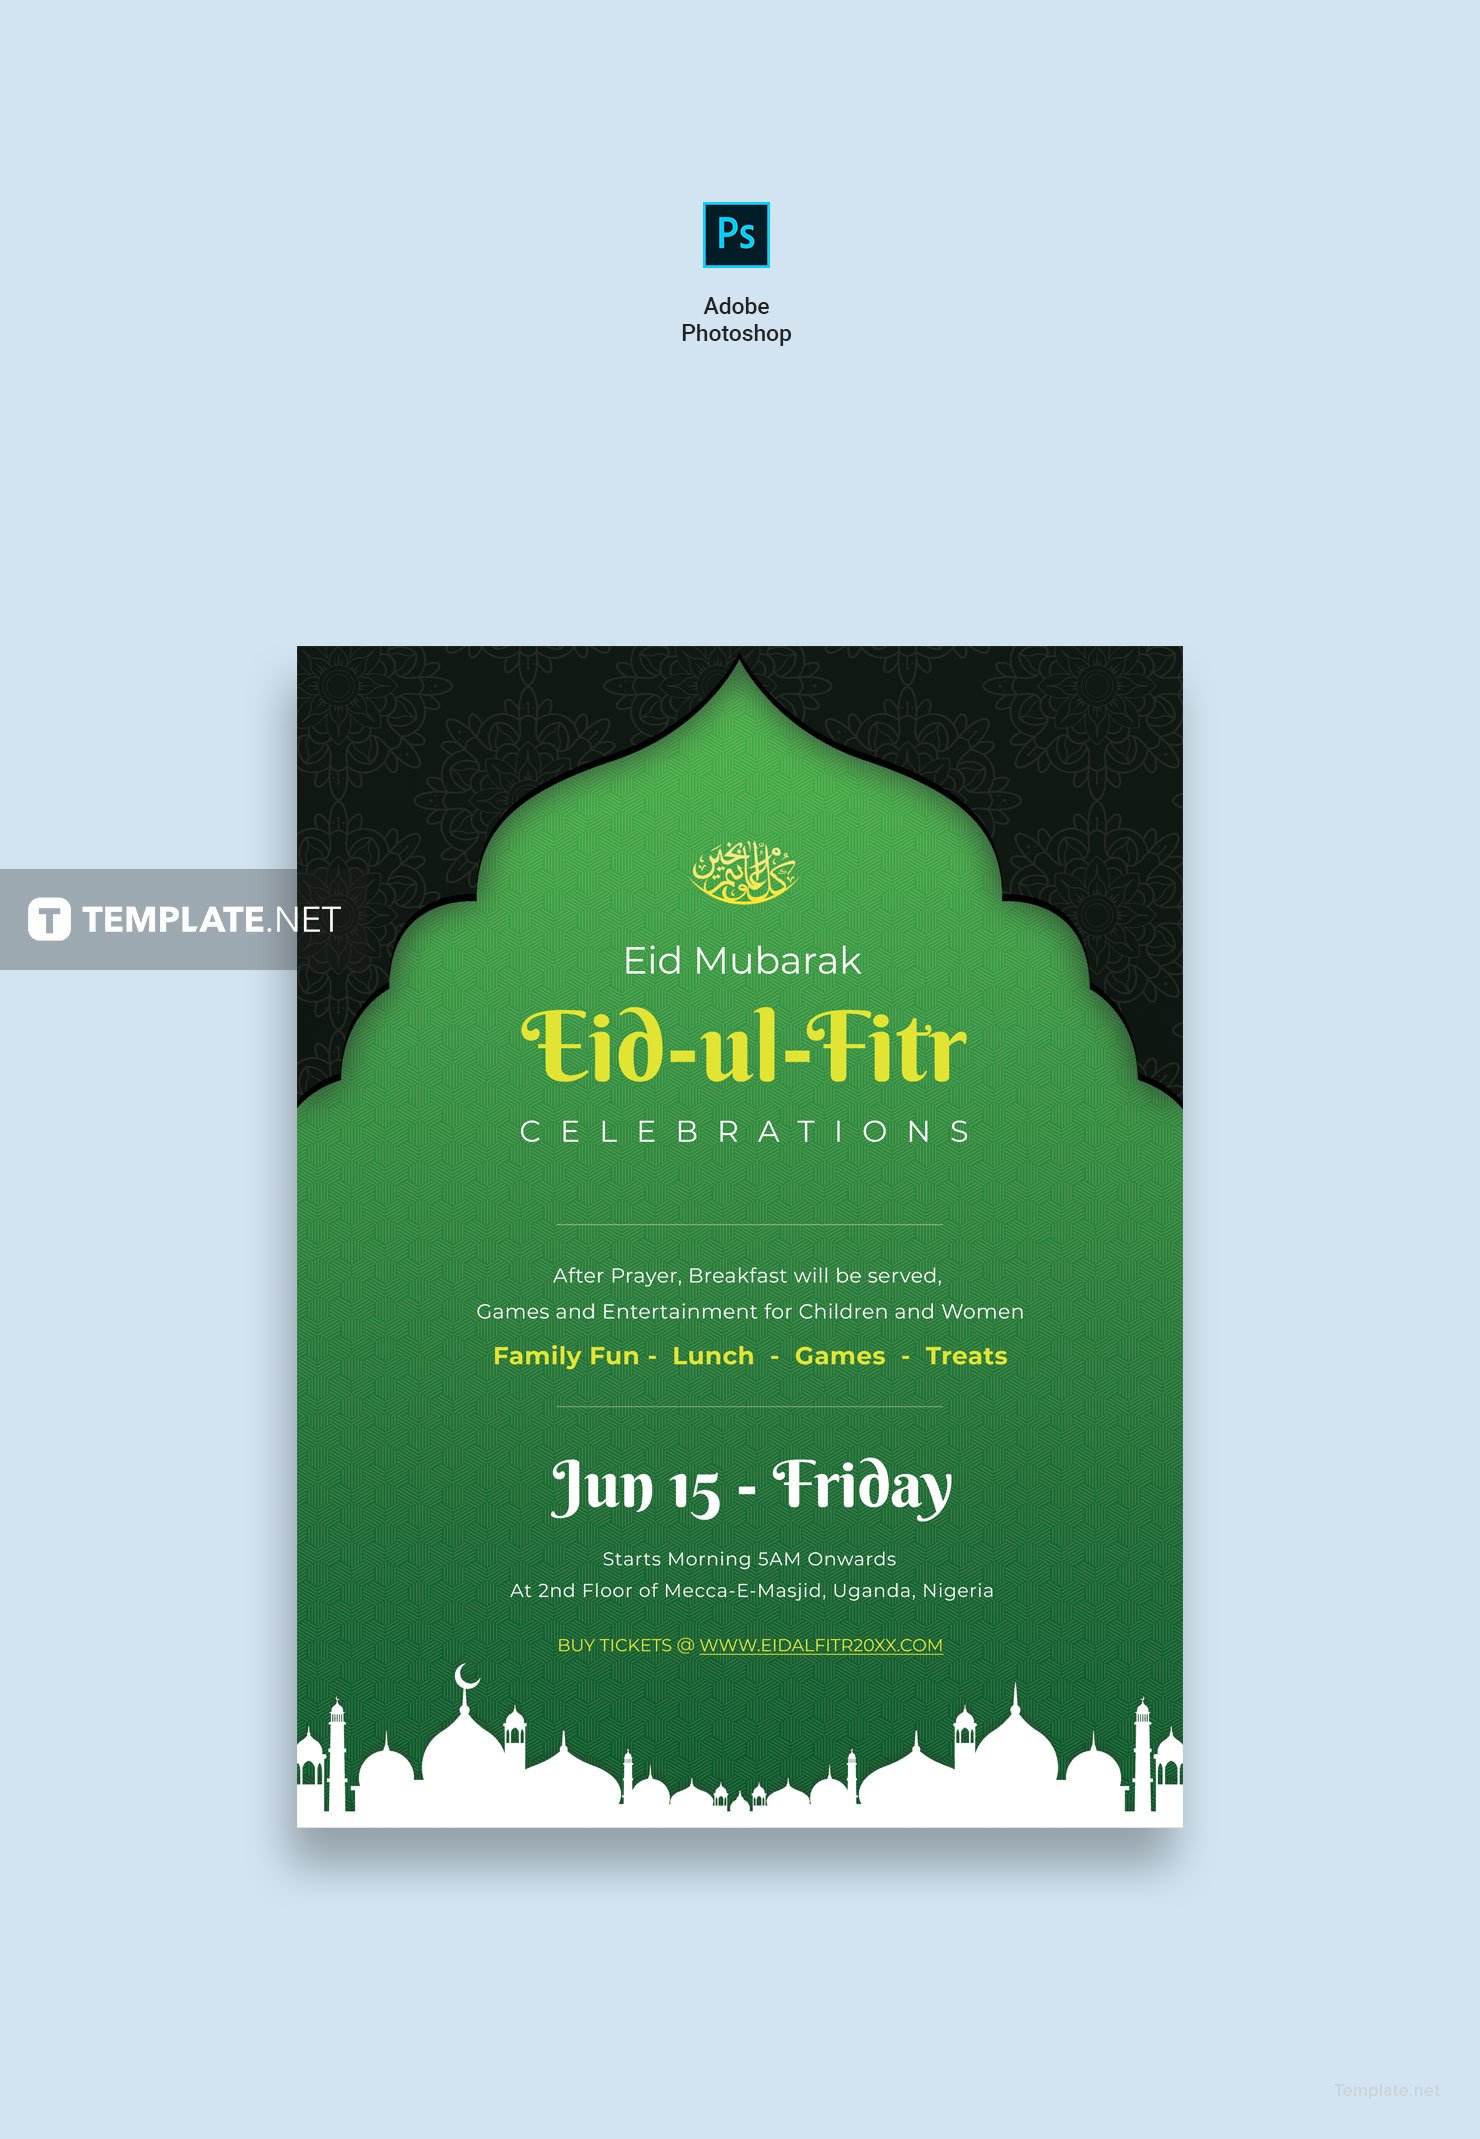 Eid Ul Fitr Poster Template in Adobe Photoshop  Template.net